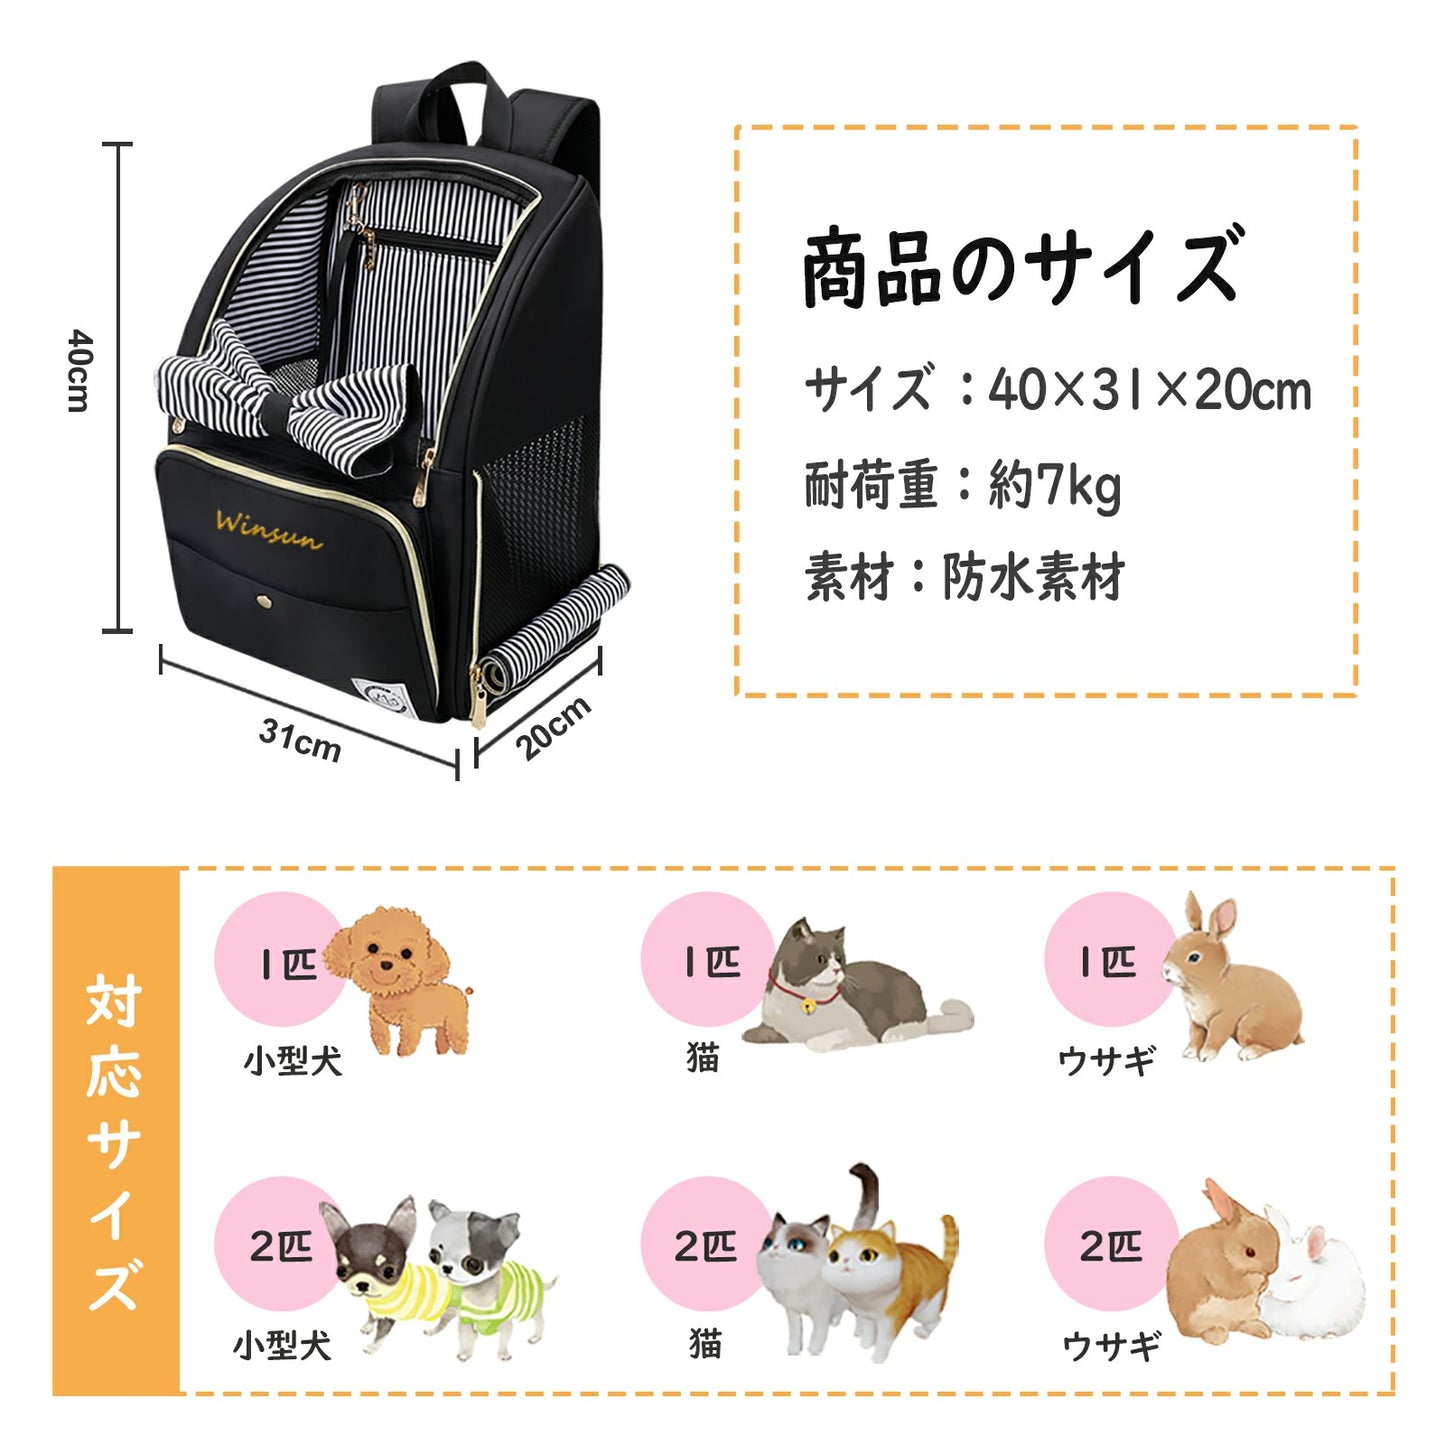 『WinSun』キャリーリュック《ストライプ》 小型犬（6kg以下）,猫（8kg以下) 刺繍入り オリジナル